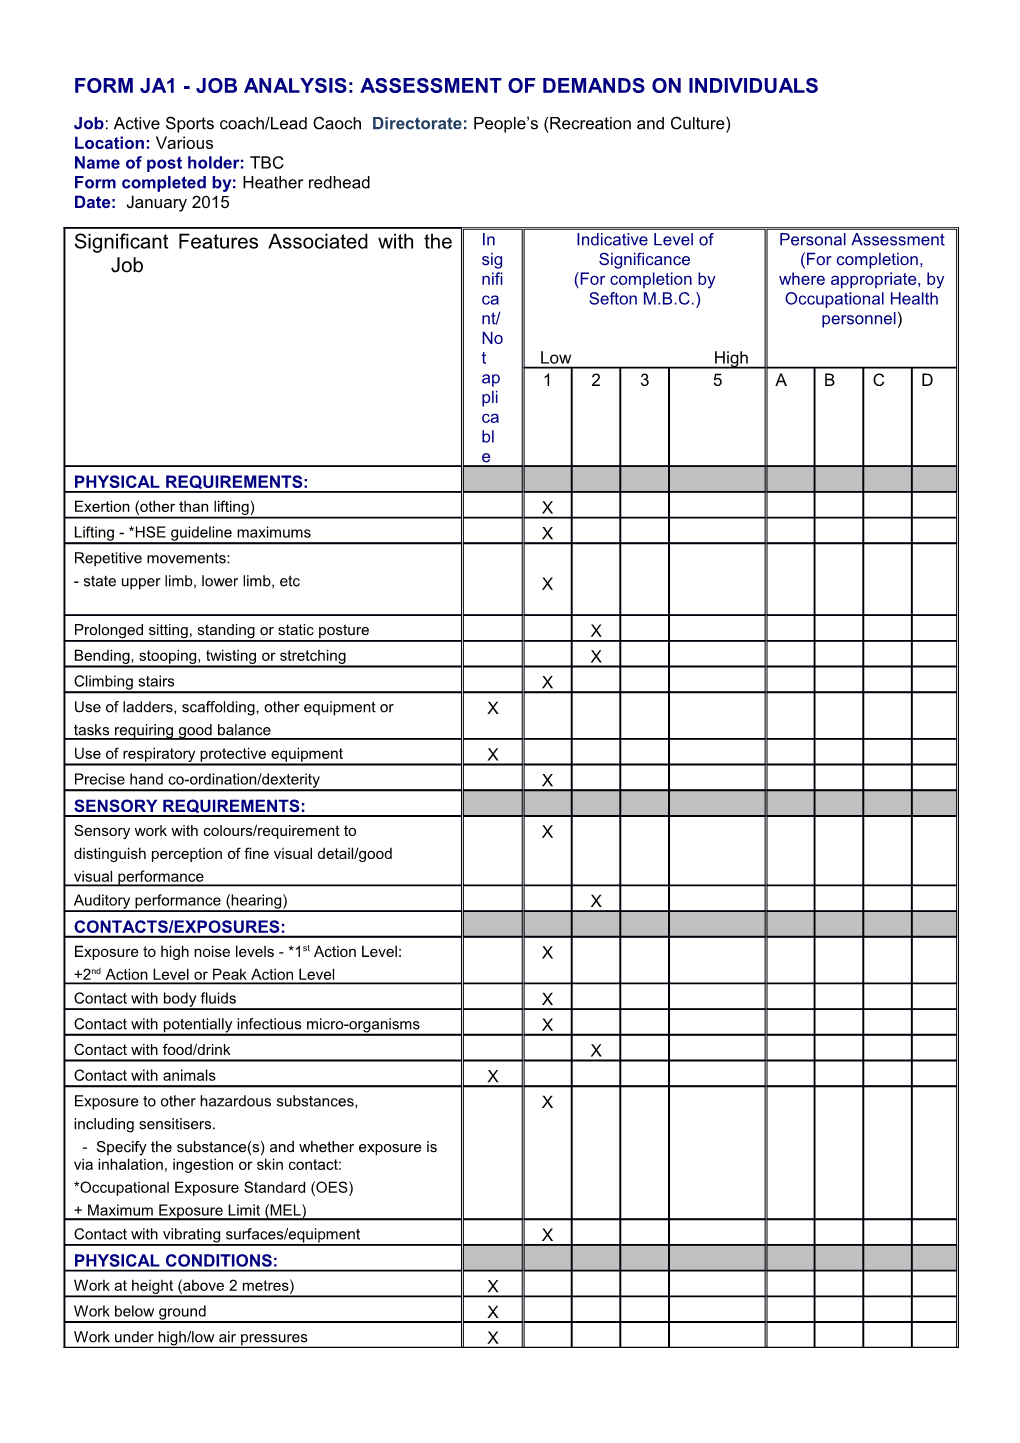 Form Ja1 - Job Analysis: Assessment of Demands on Individuals